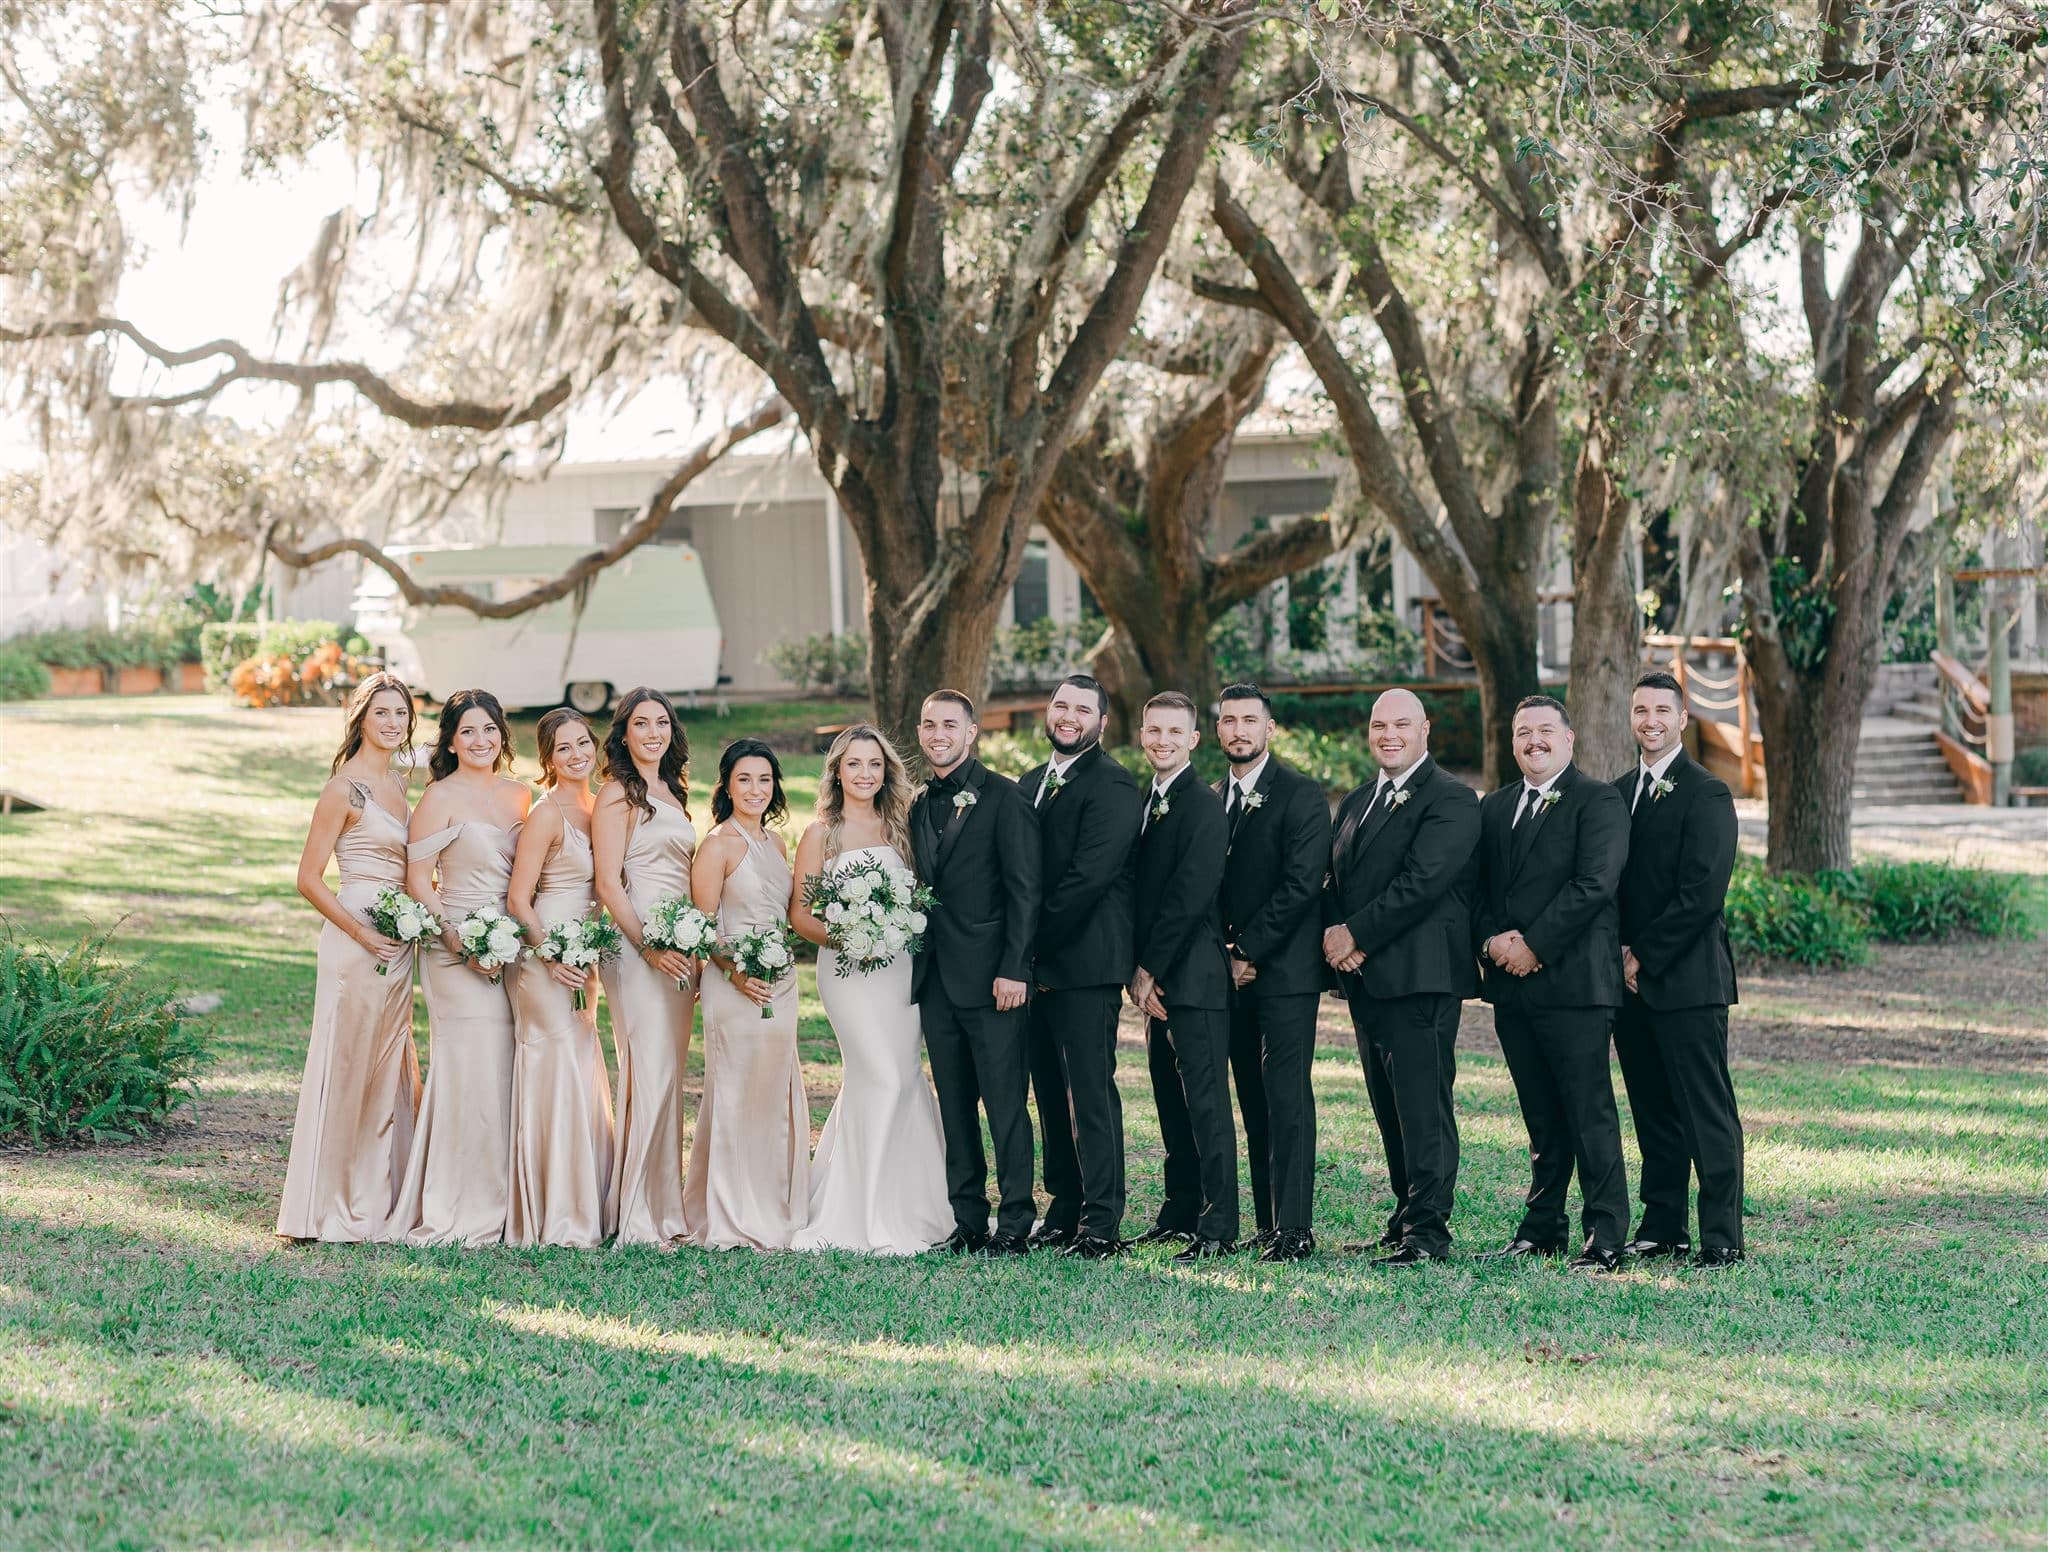 Up the Creek Farms Wedding Venue in FL - Cost, Photos, & More - Wedding ...